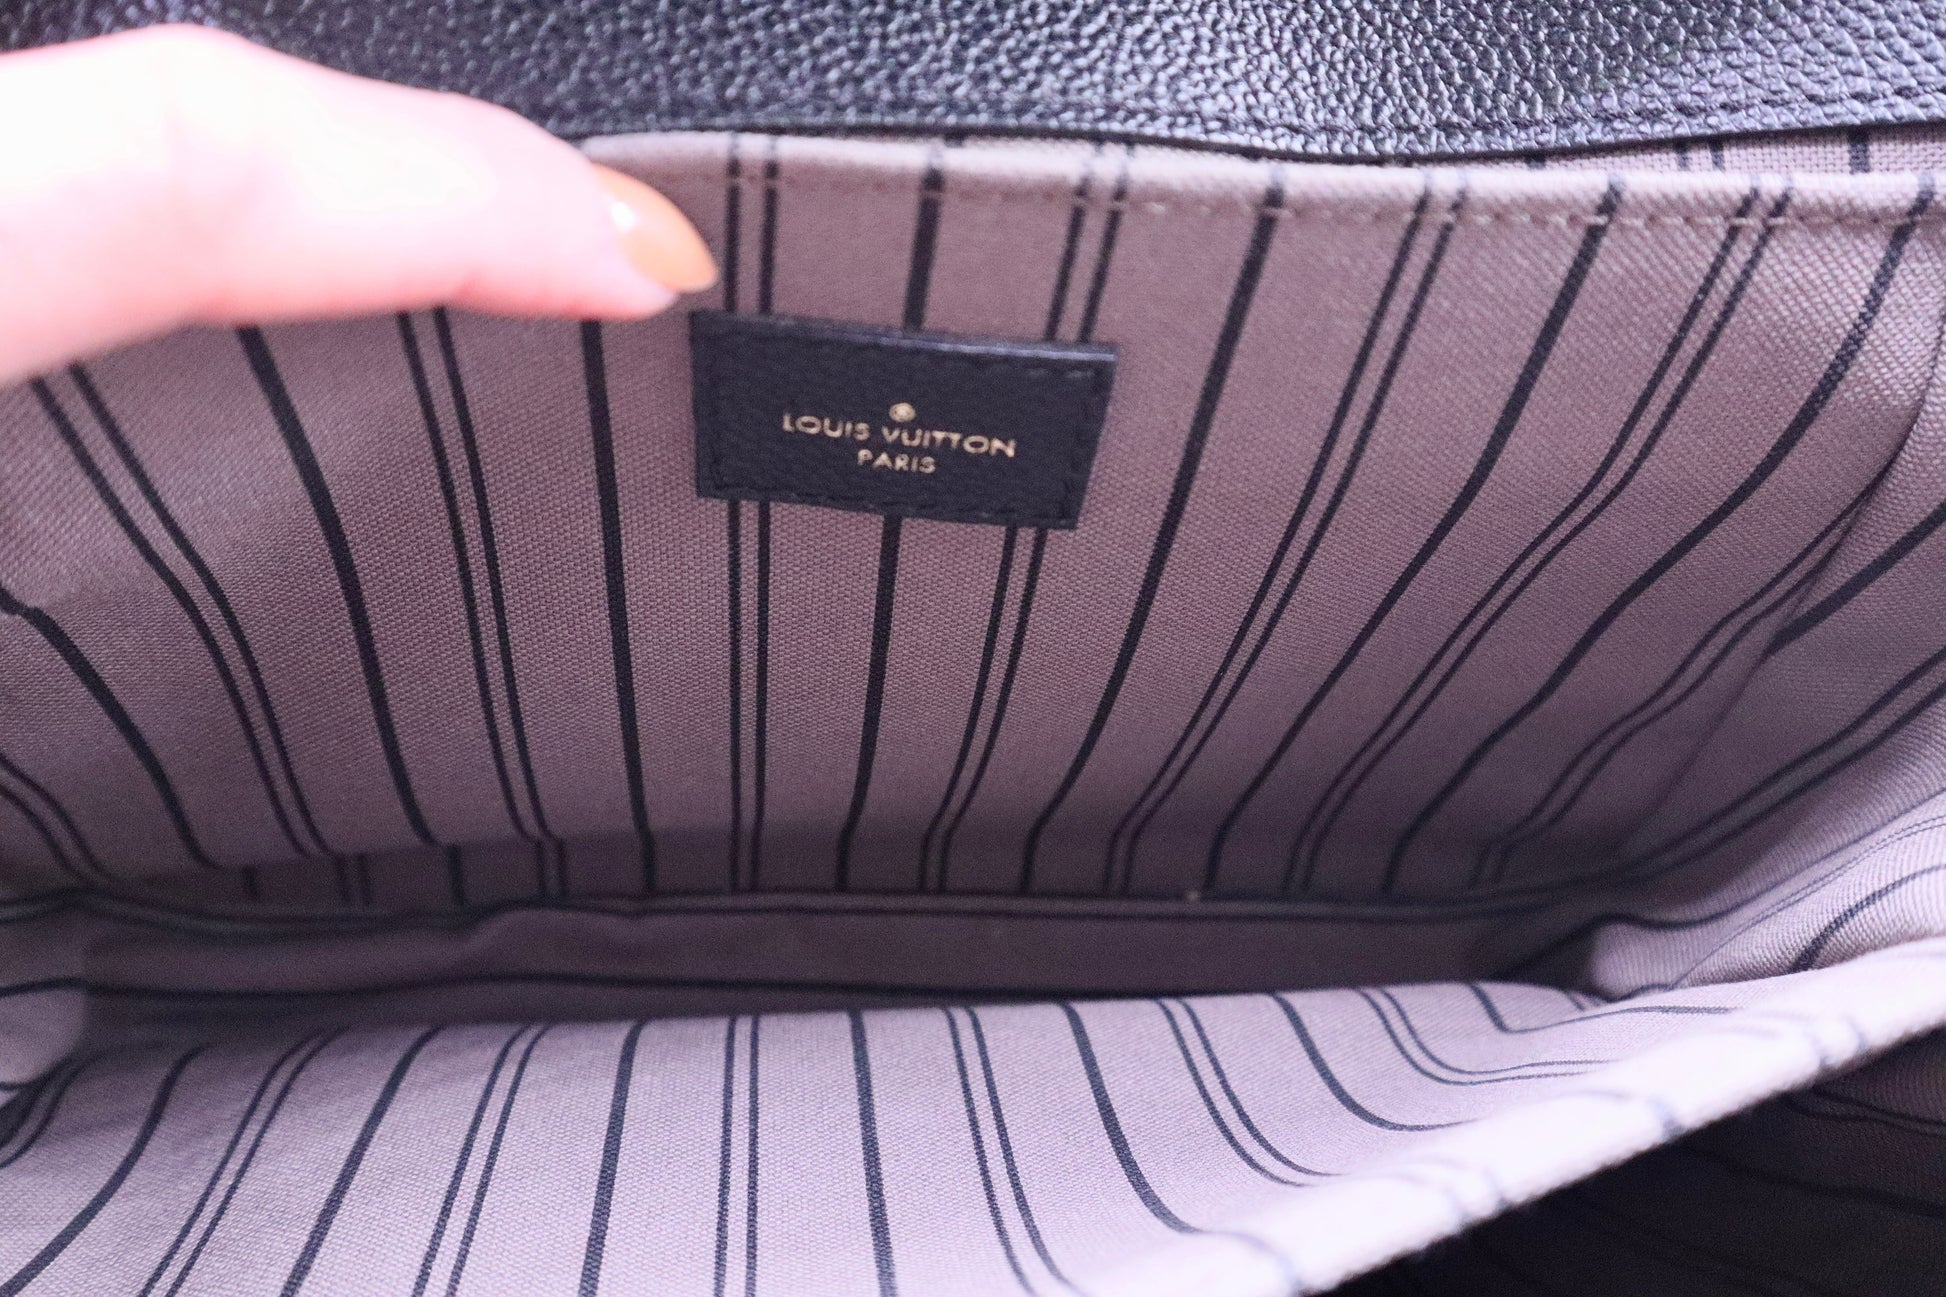 Close up pocket with Louis Vuitton label